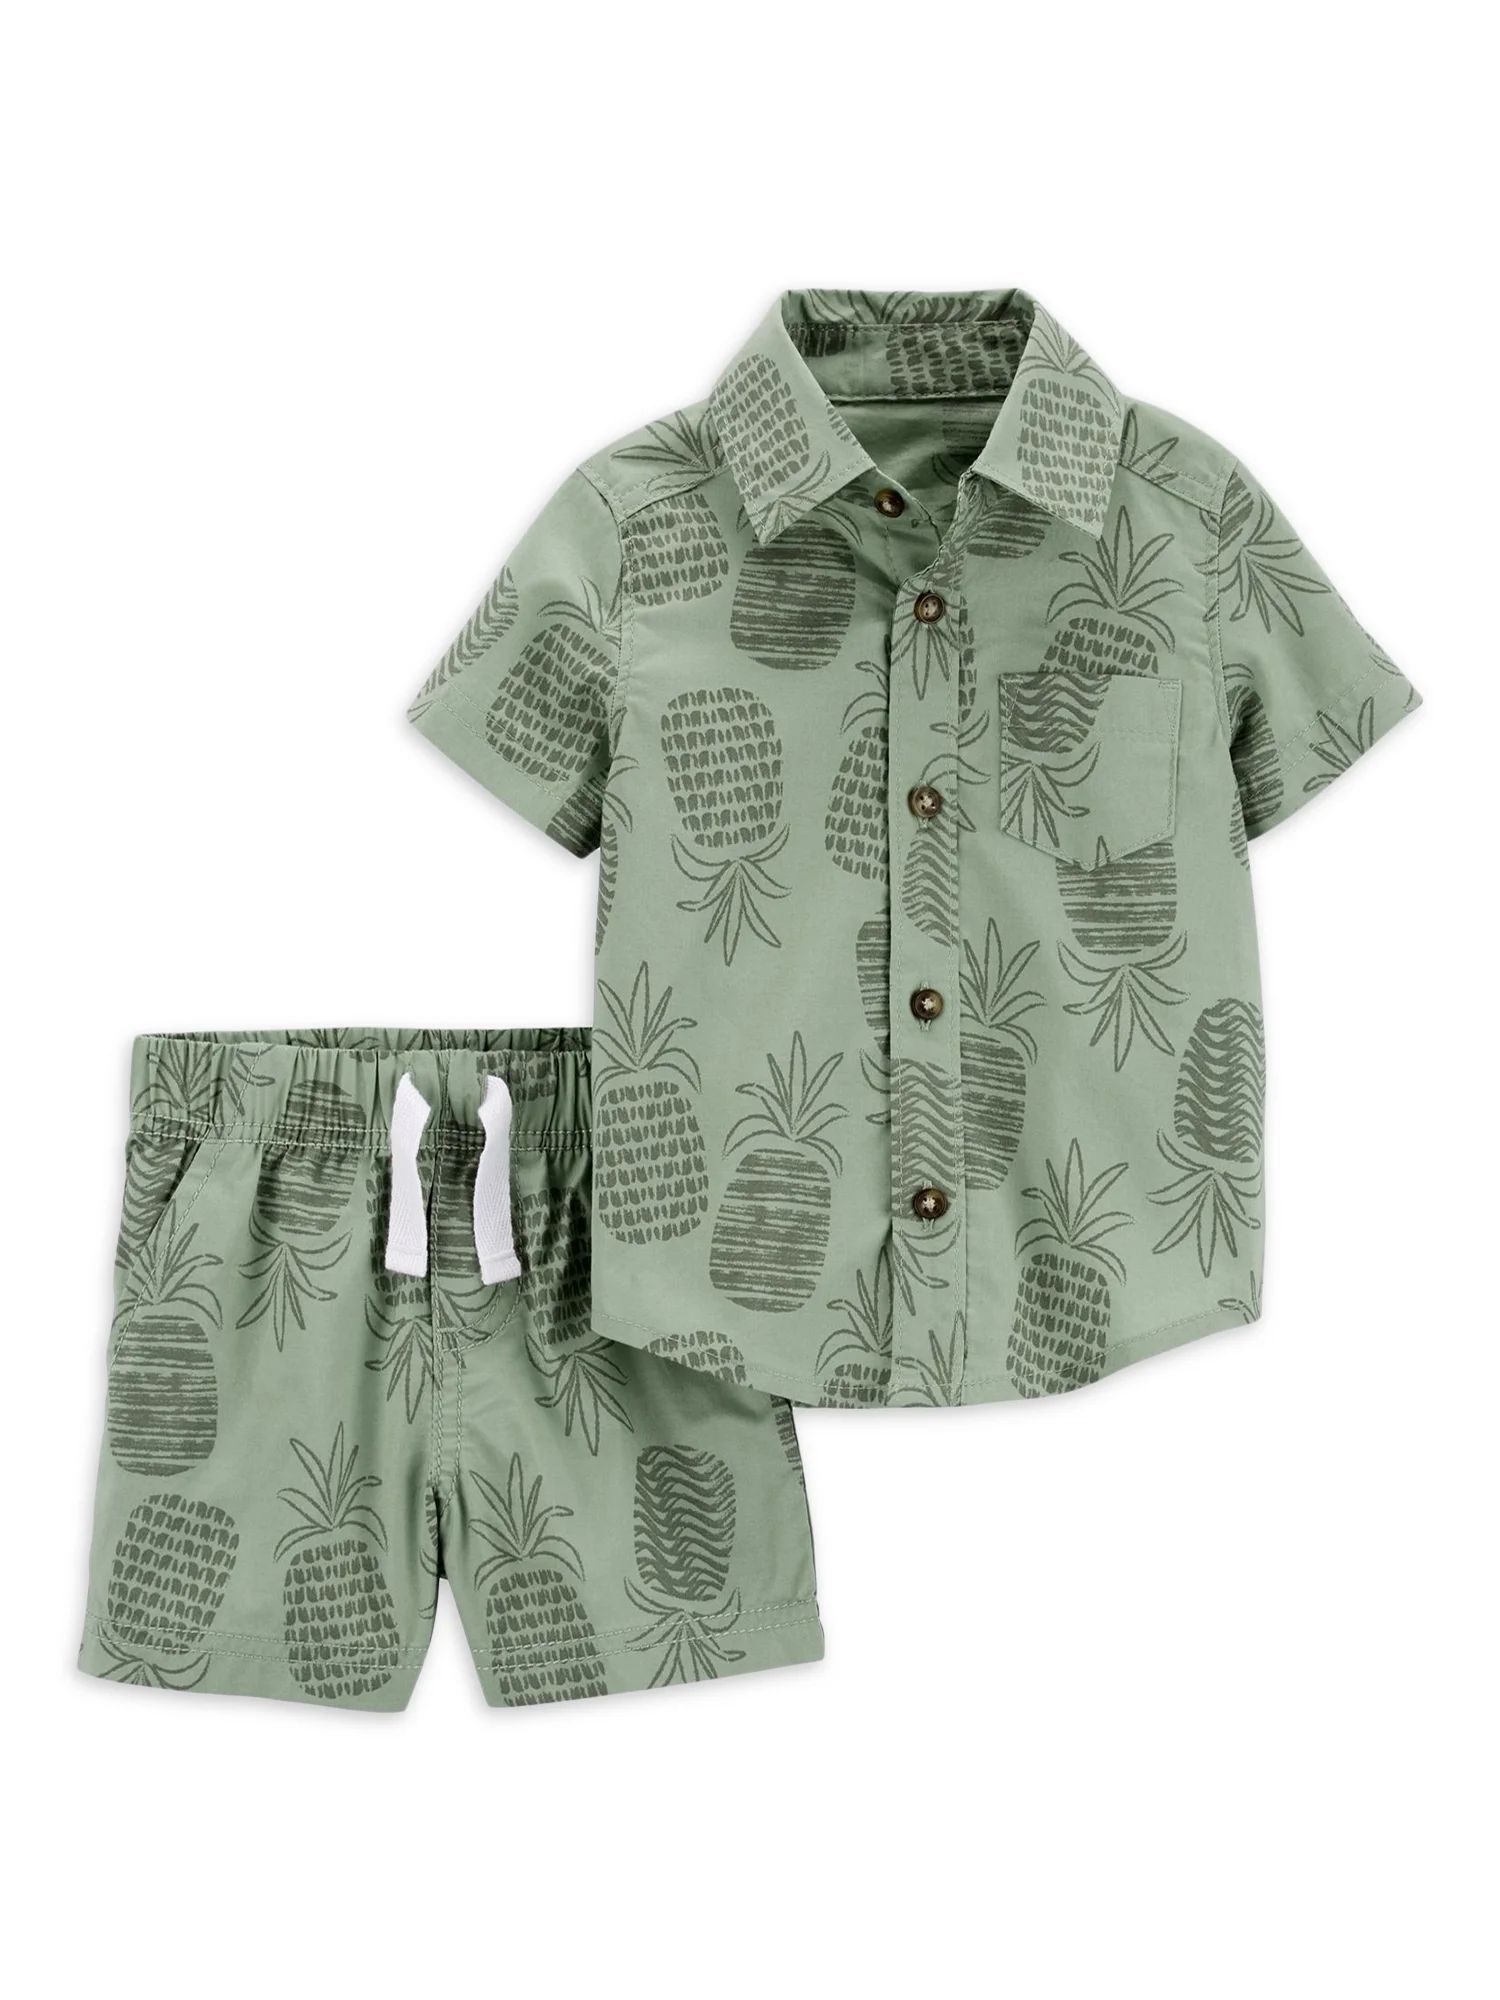 Carter's Child of Mine Baby Boy Outfit Set, 2-Piece, Sizes 0/3-24 Months | Walmart (US)